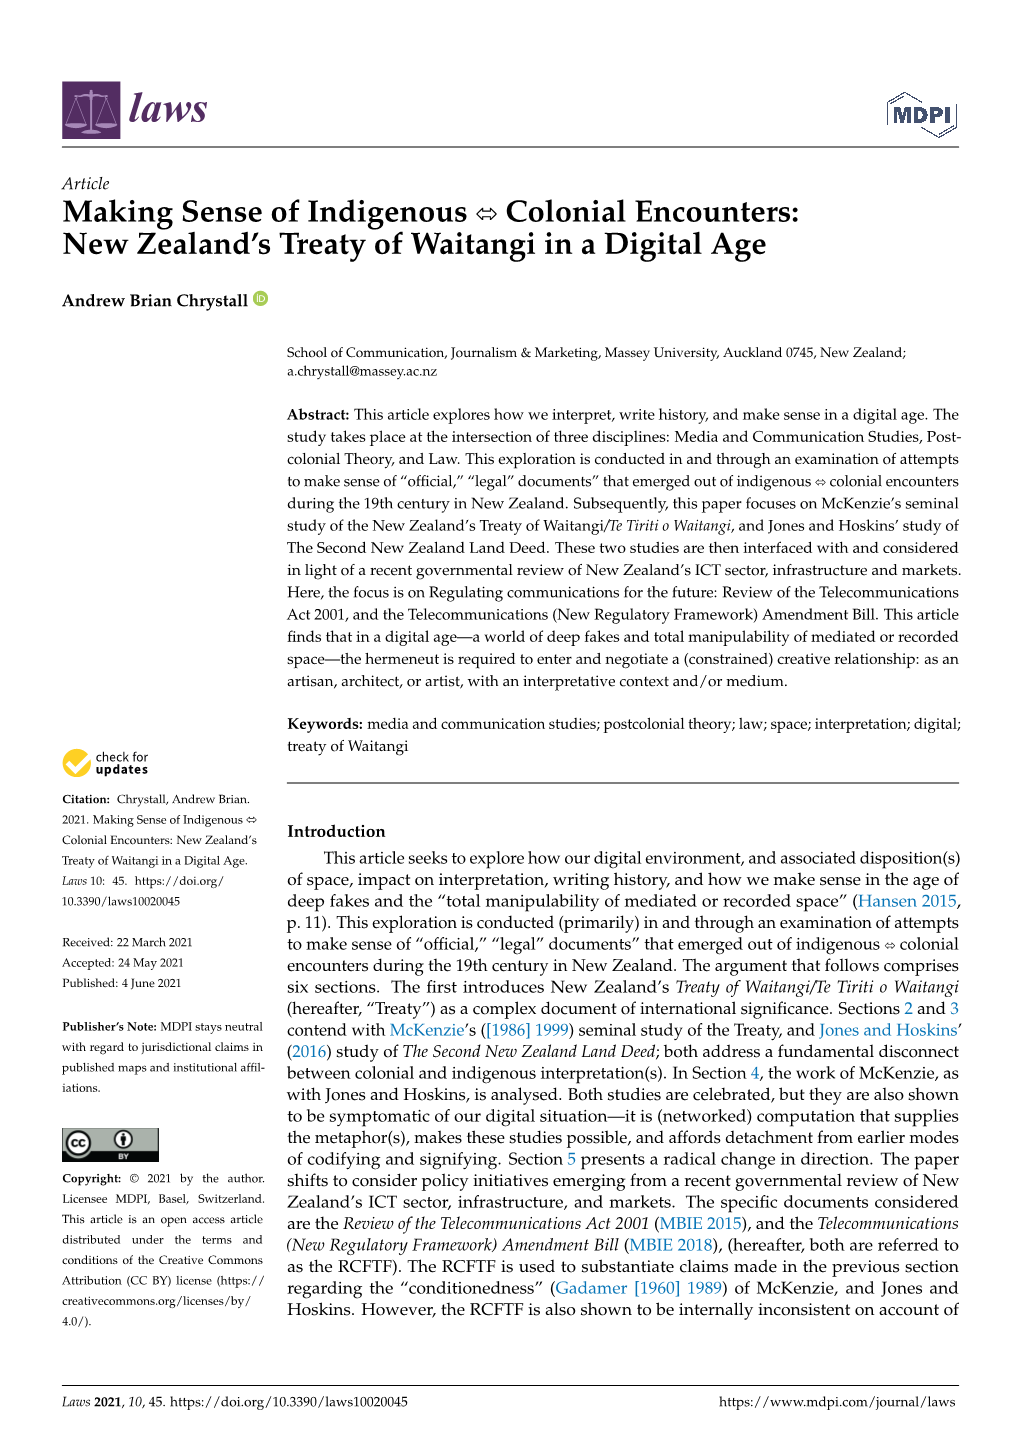 New Zealand's Treaty of Waitangi in a Digital